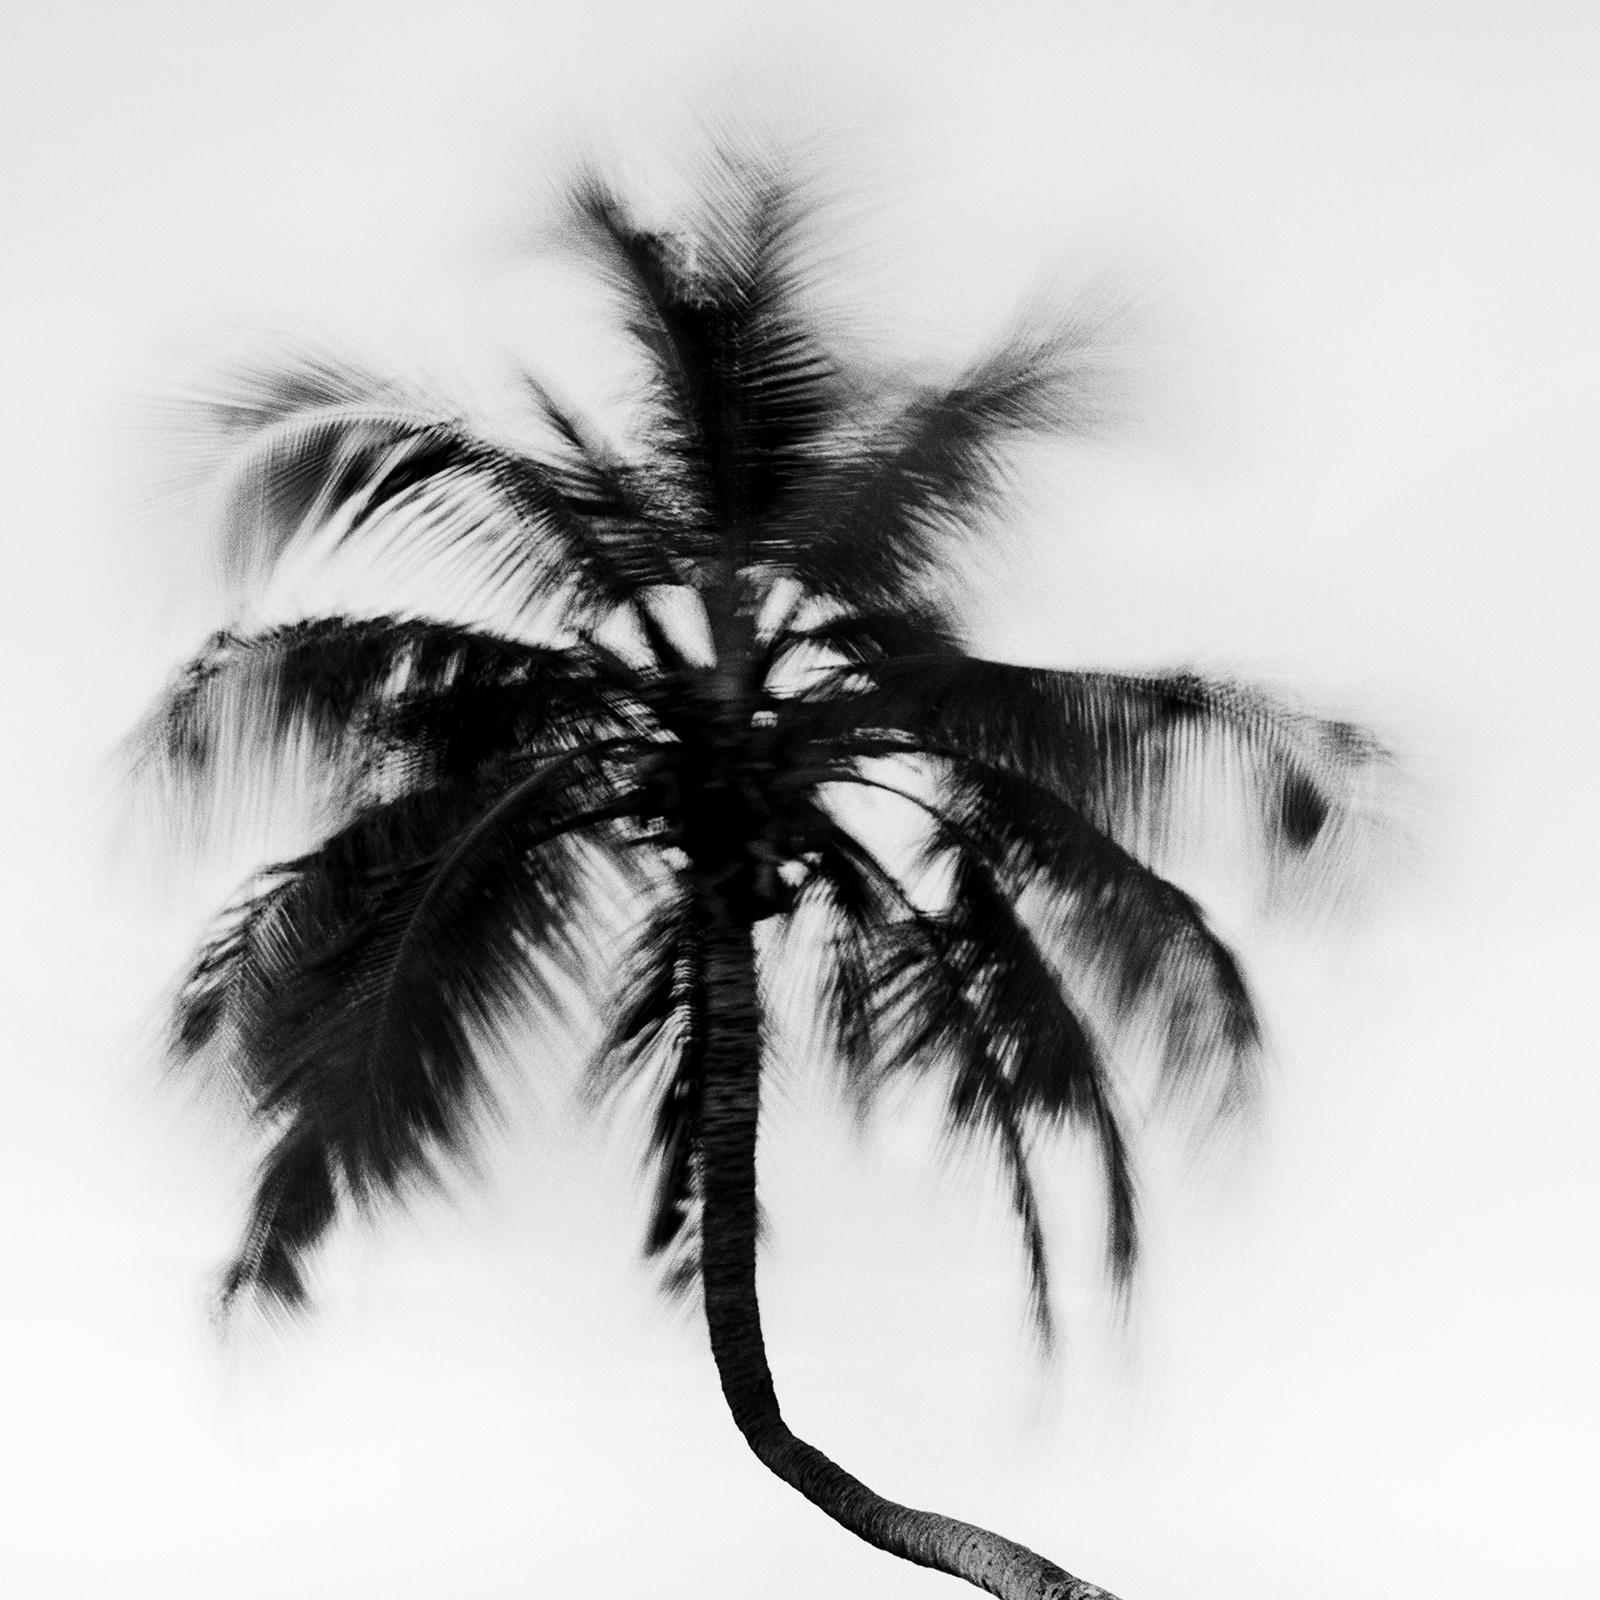 Bent Palm, Beach, Florida, USA, black and white fine art photography, landscape For Sale 3